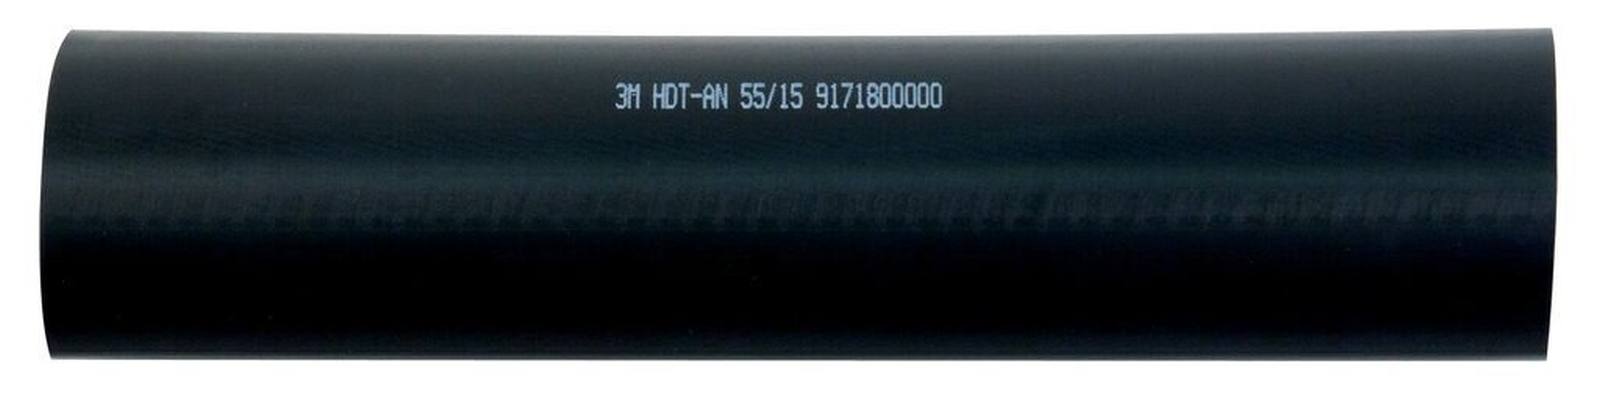 3M HDT-AN Tubo termorretráctil de pared gruesa con adhesivo, negro, 55/15 mm, 1 m